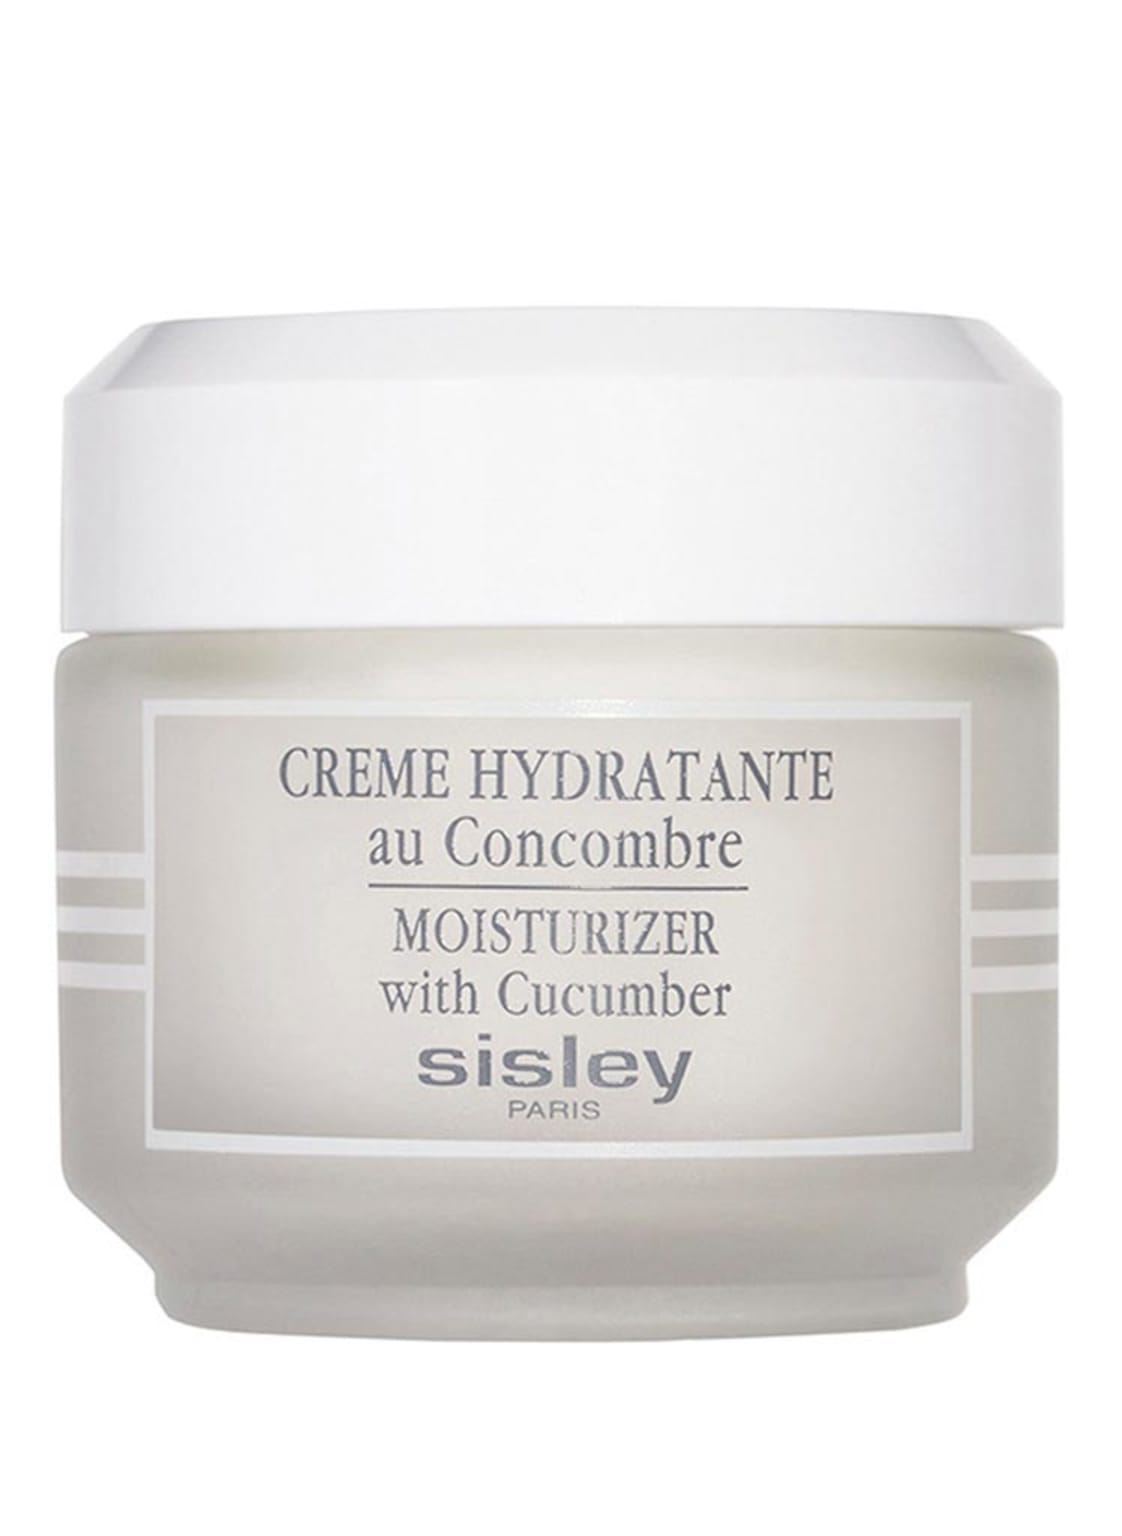 Sisley Paris Tiegel Crème Hydratante Au Concombre Versorgt trockene Haut ideal mit Feuchtigkeit 50 ml von sisley Paris